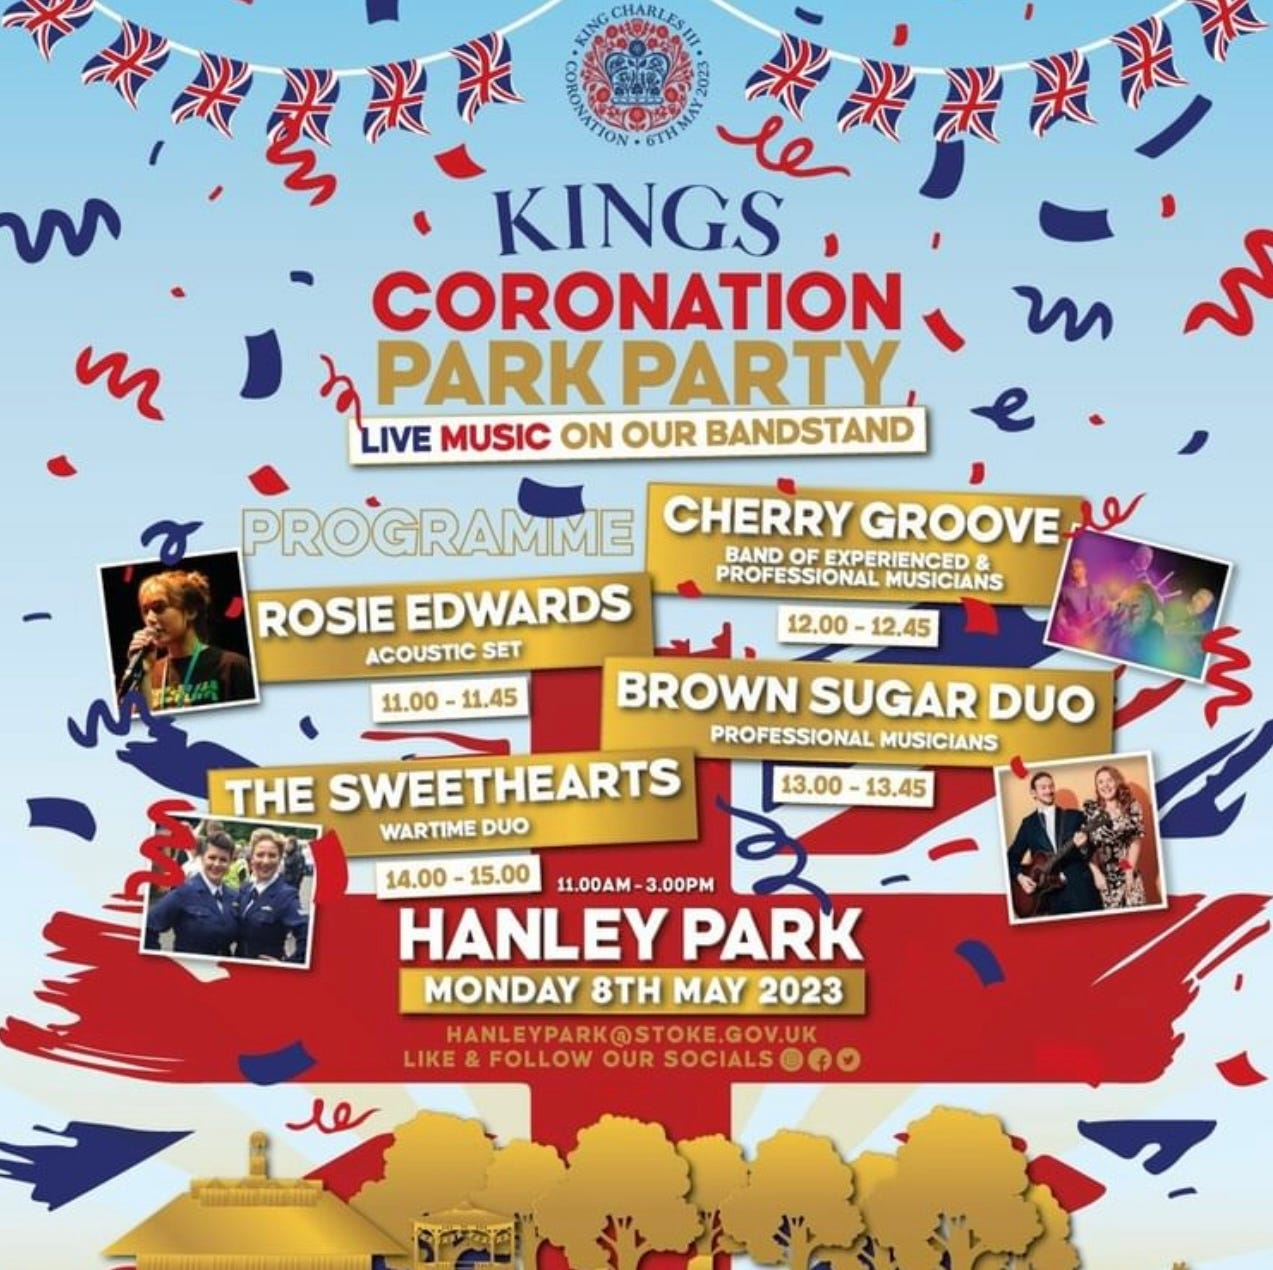 King's Coronation Park Party, Hanley Park